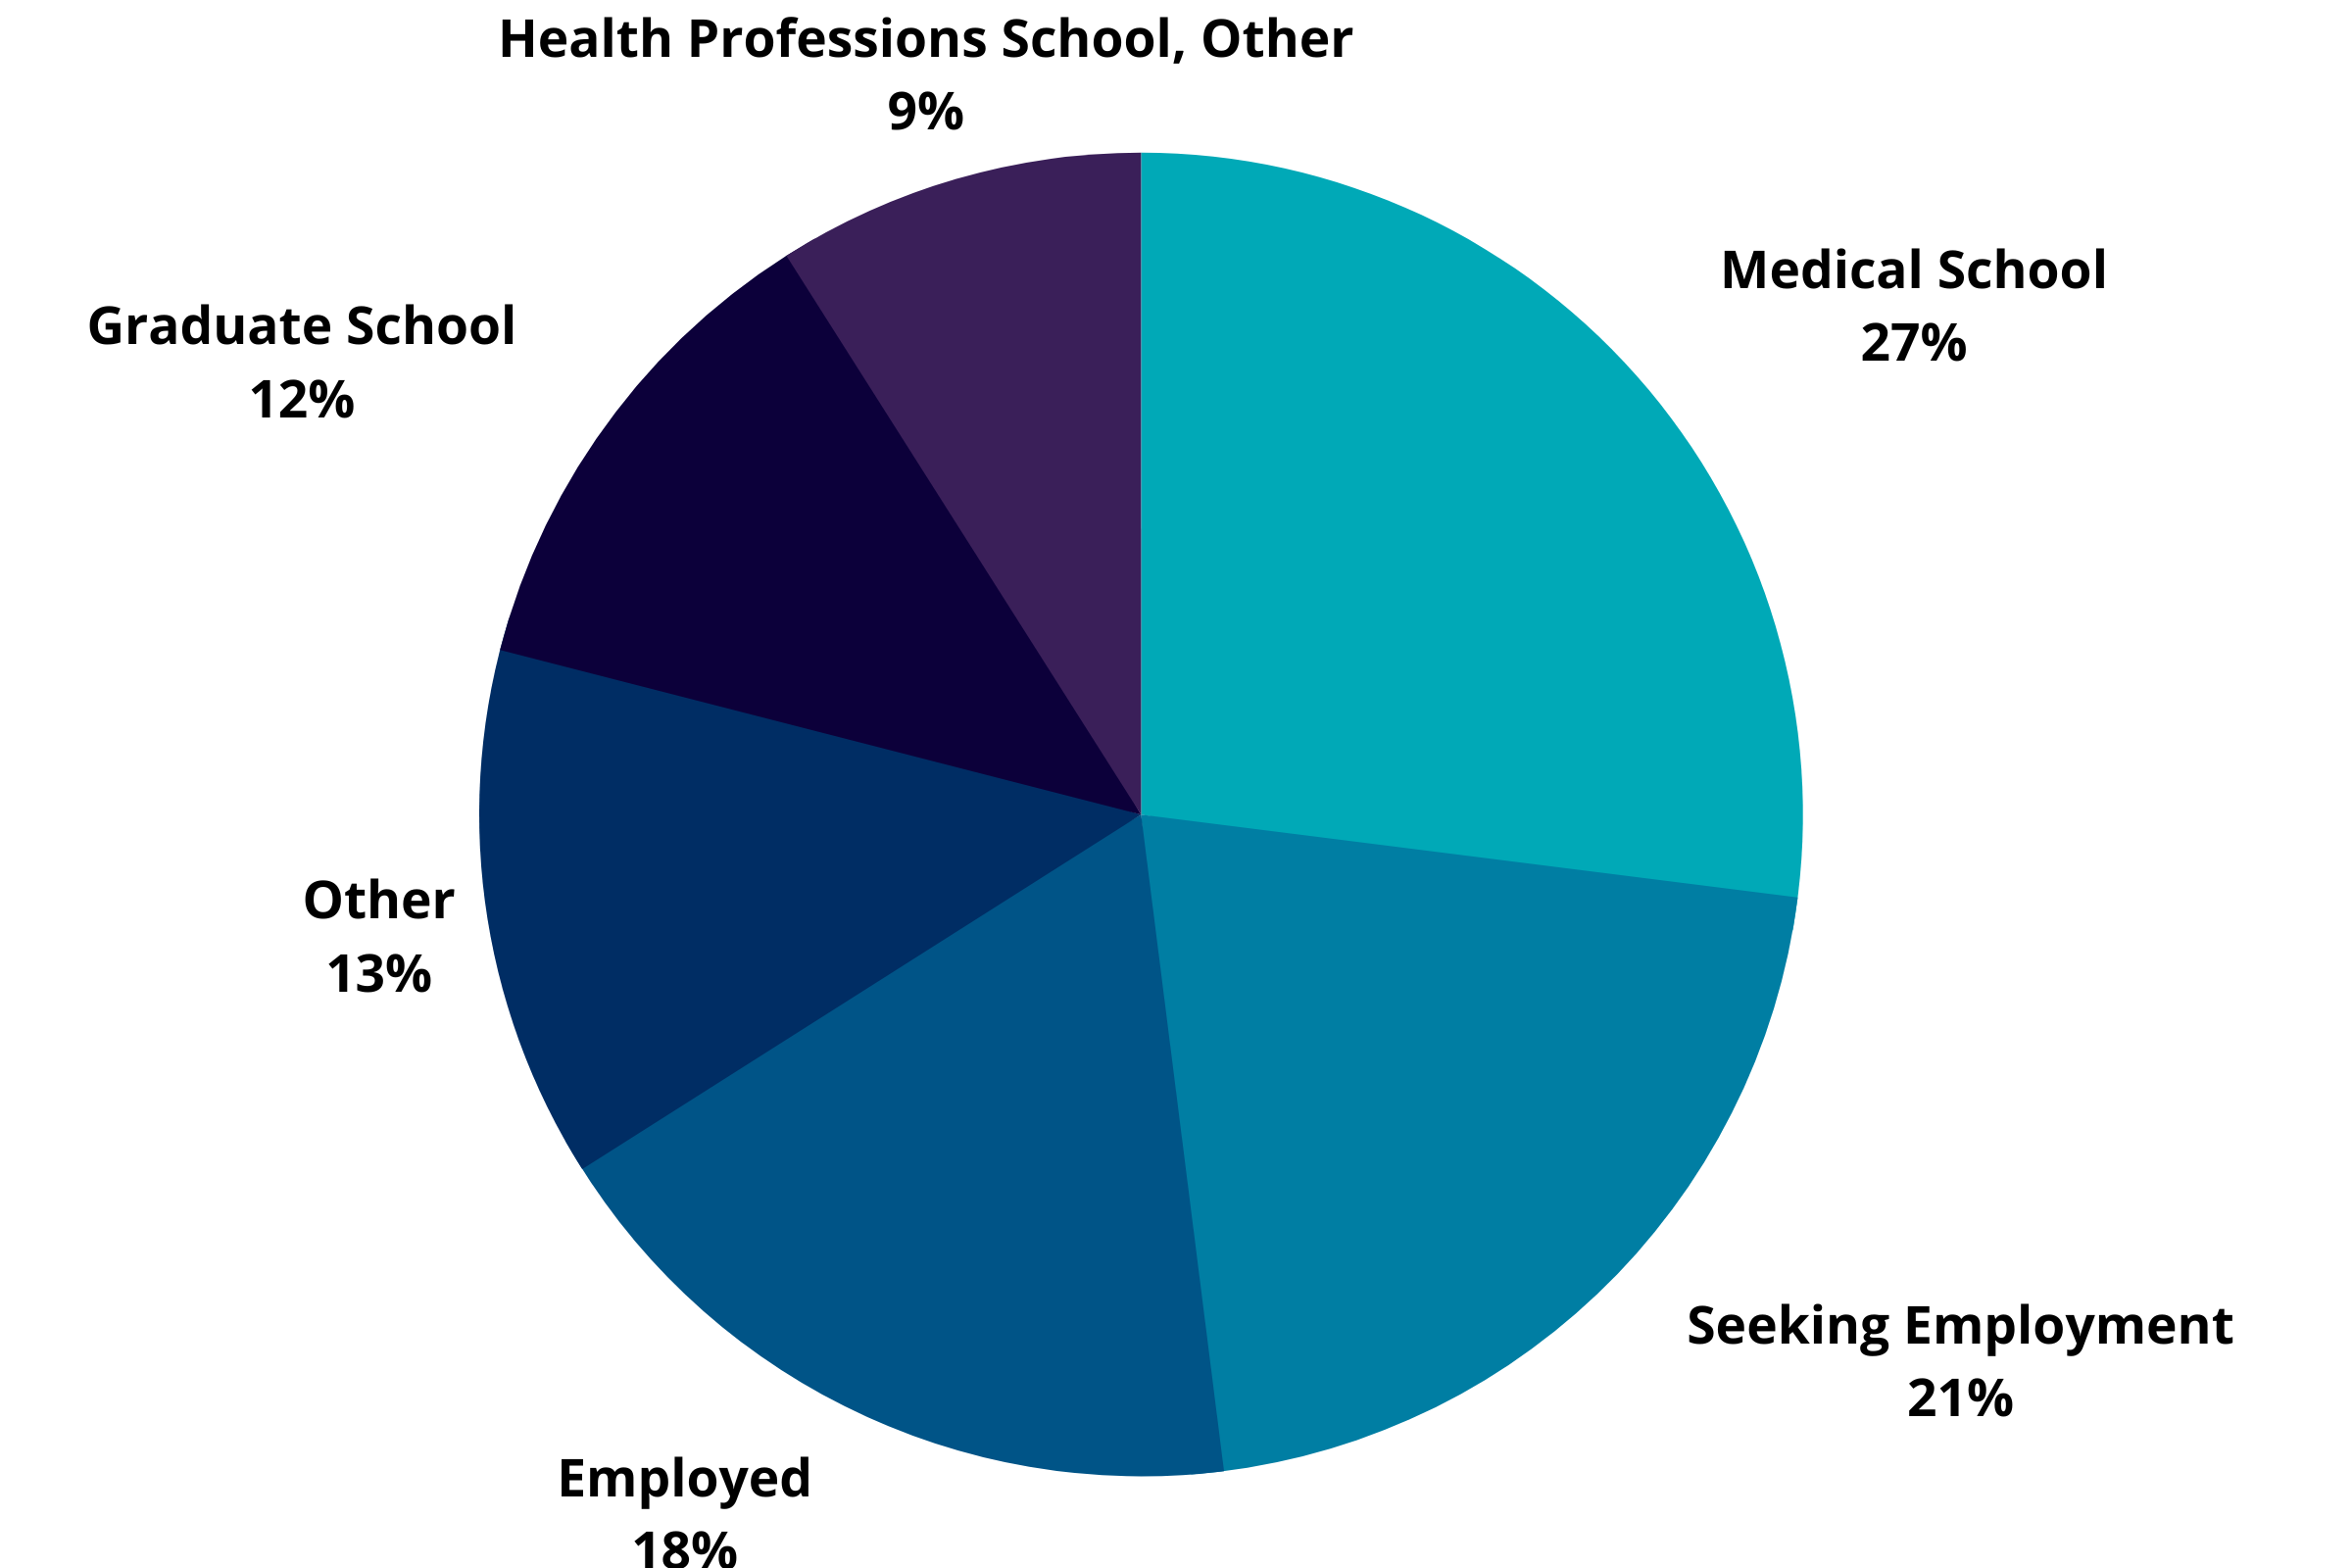 Biochemistry Graduation Outcomes: Medical School 27%, Seeking Employment 21%, Employer 18%, Graduate School 12%, Health Professions School 9%, Other 13%